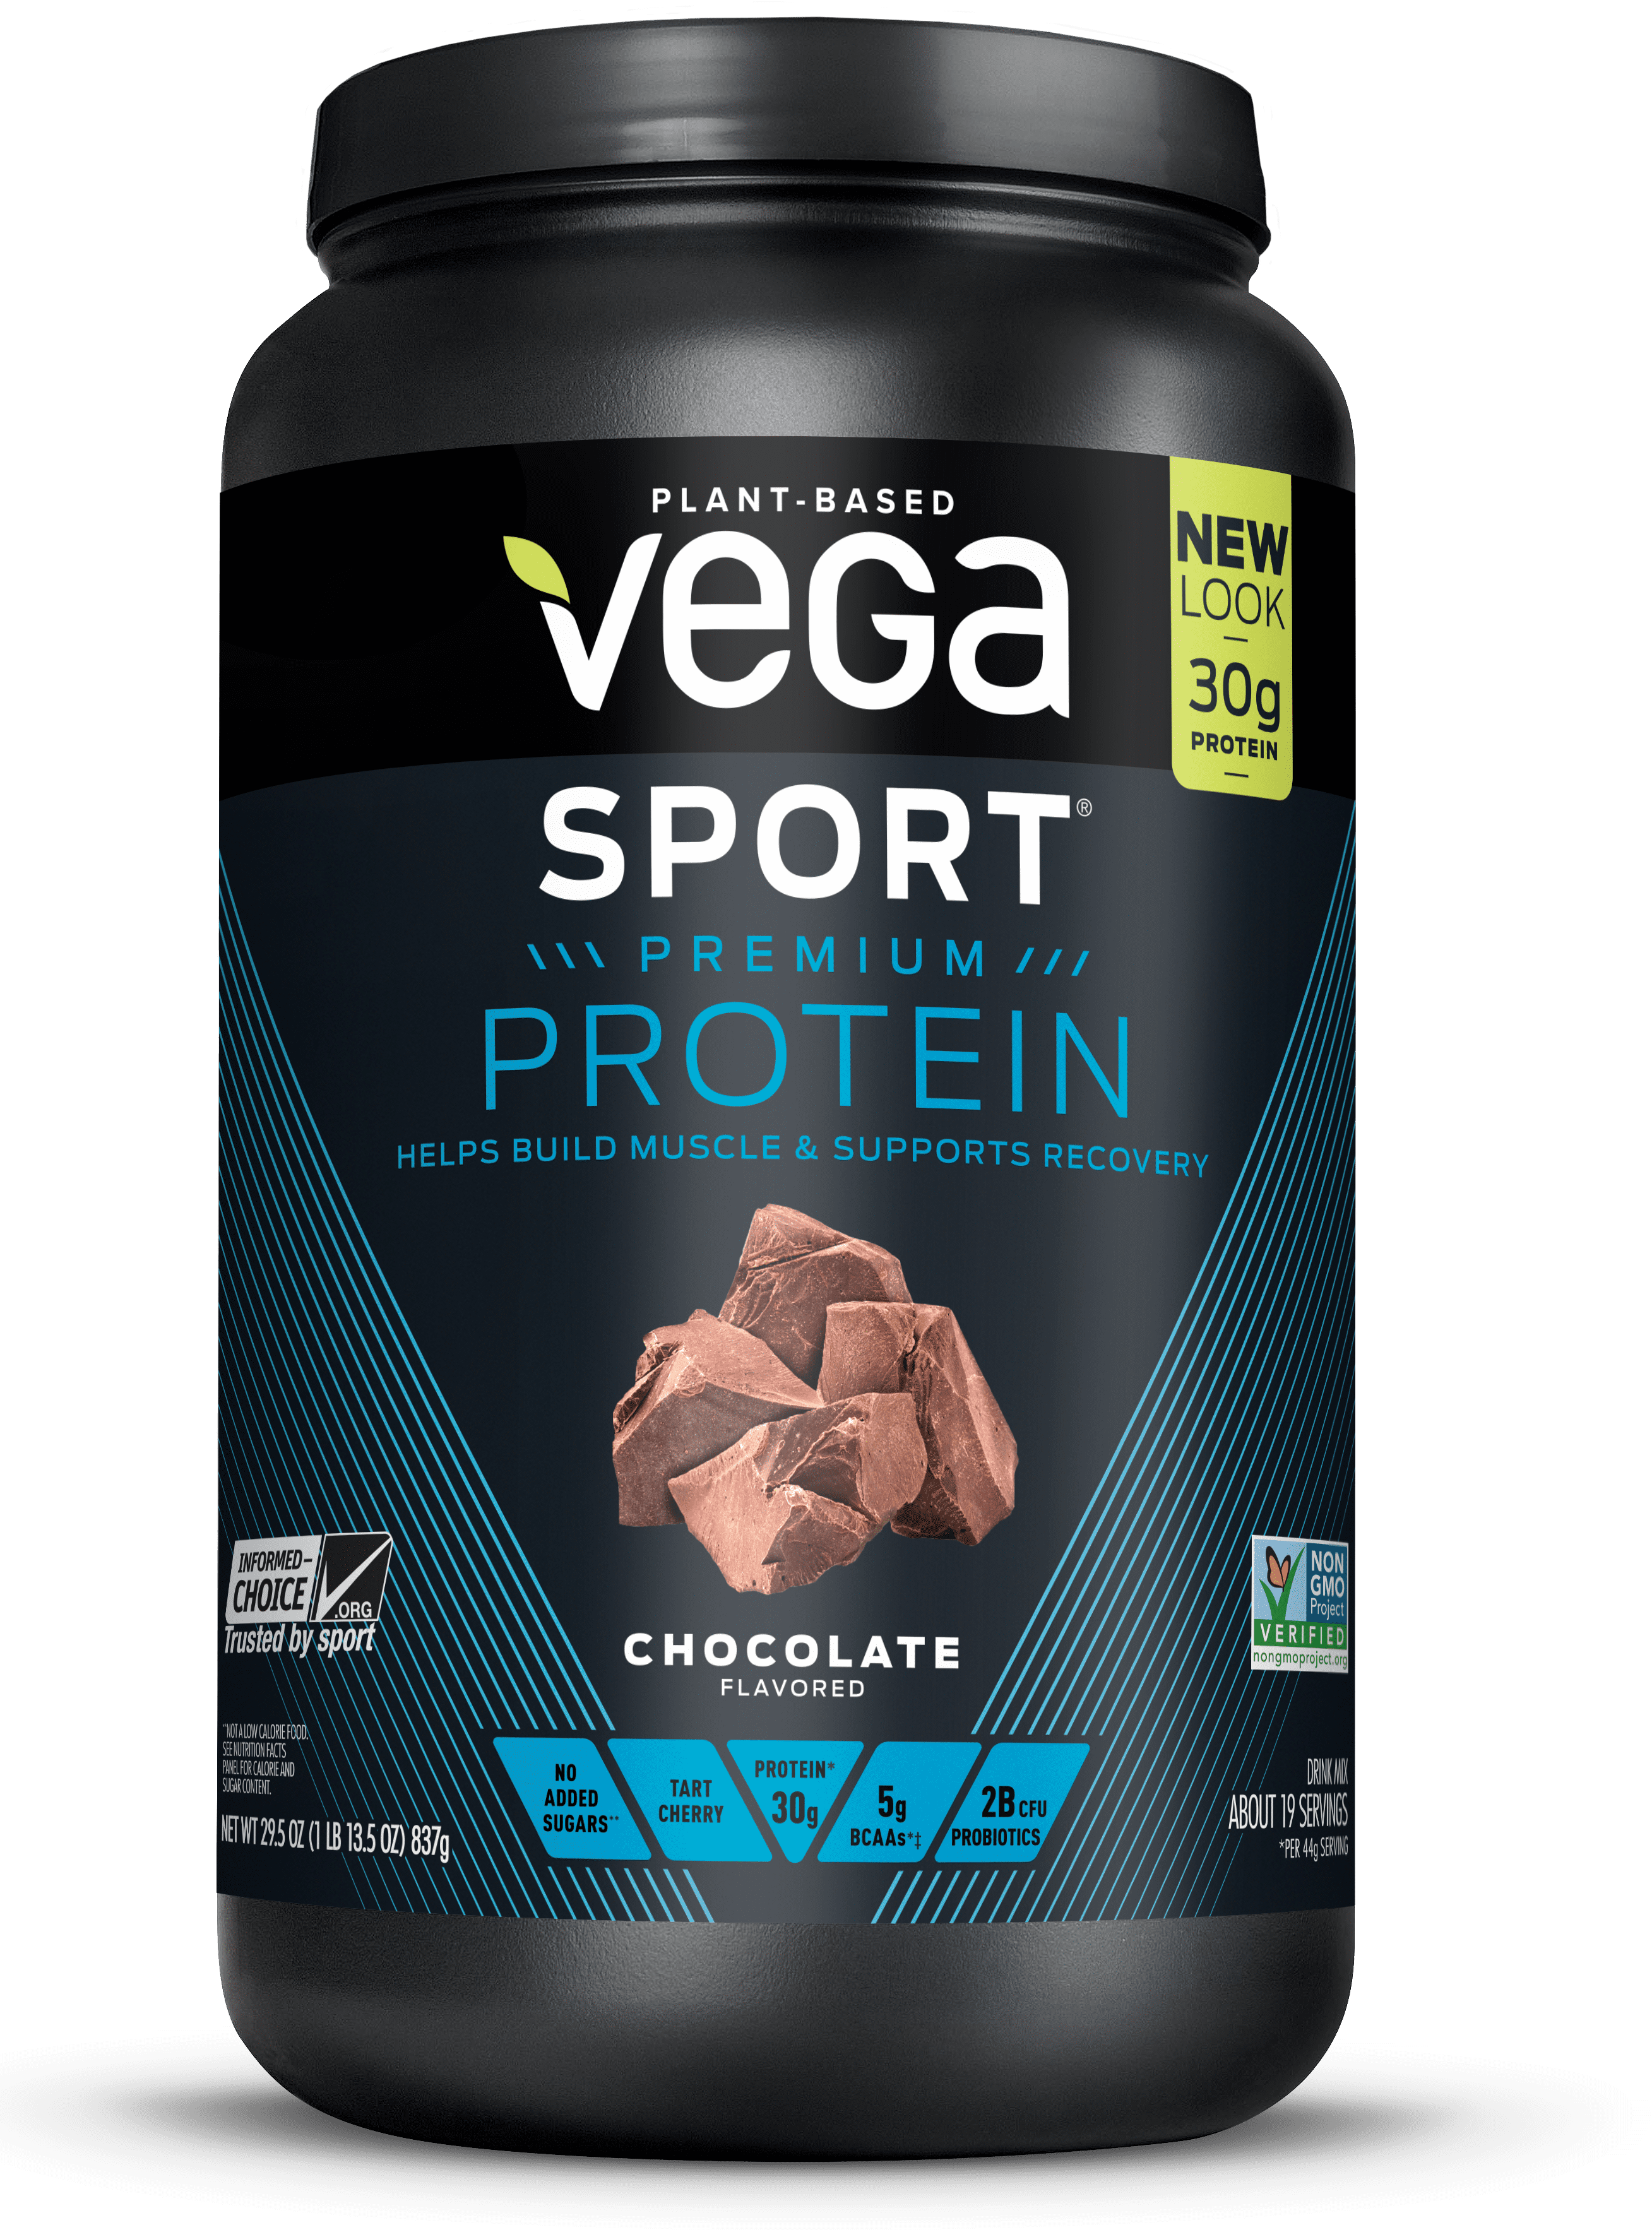 Vega Sport Premium Plant Protein Powder, Chocolate, 30g Protein, 1.8lb